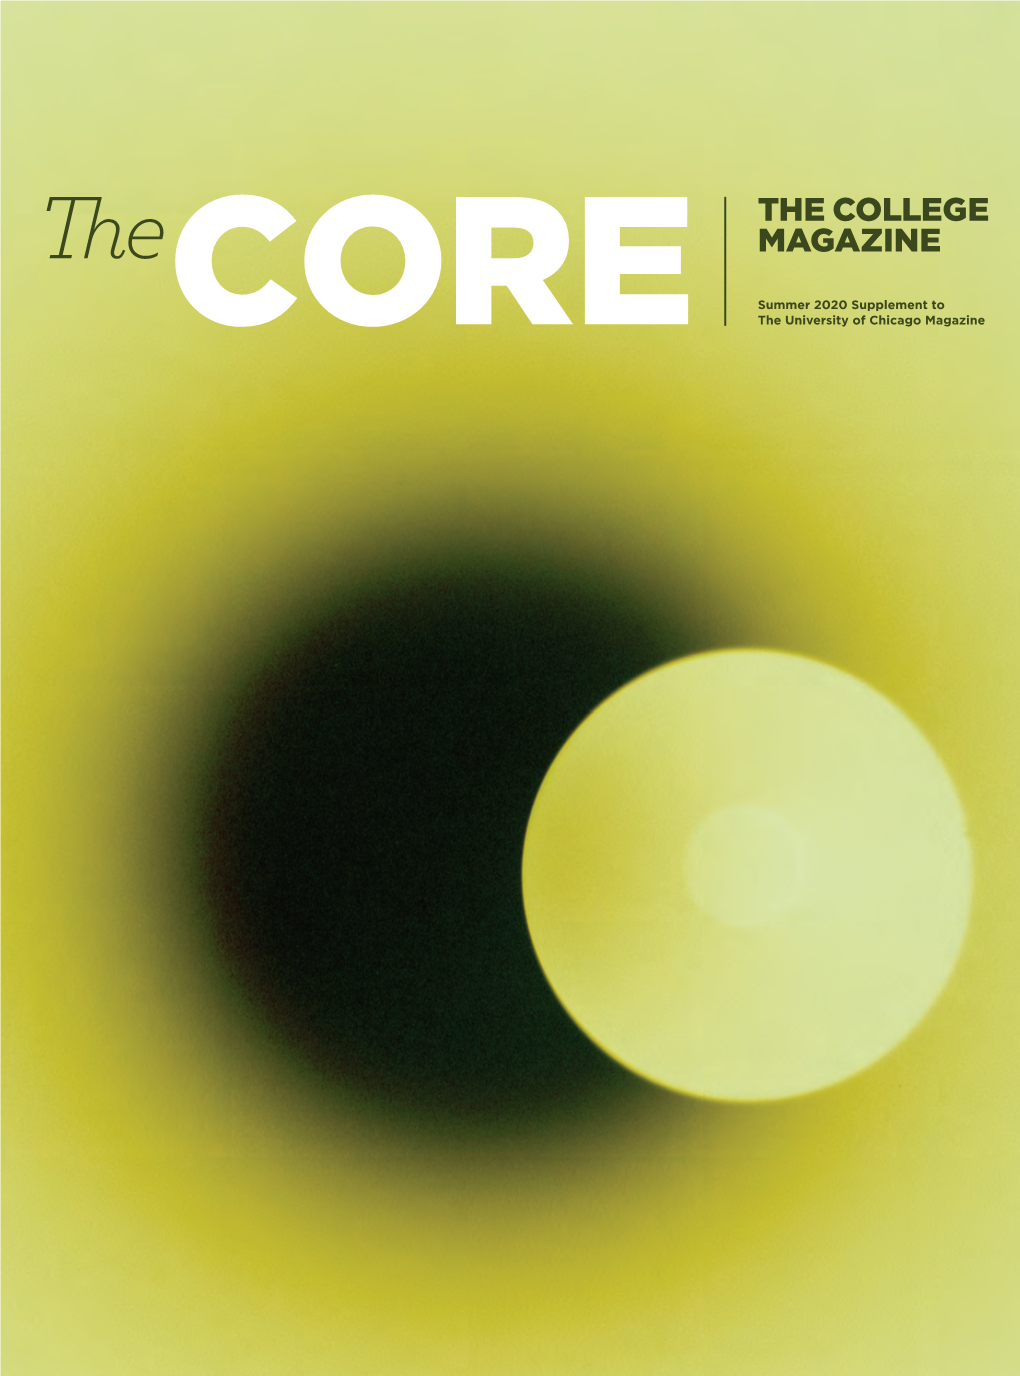 The College Magazine